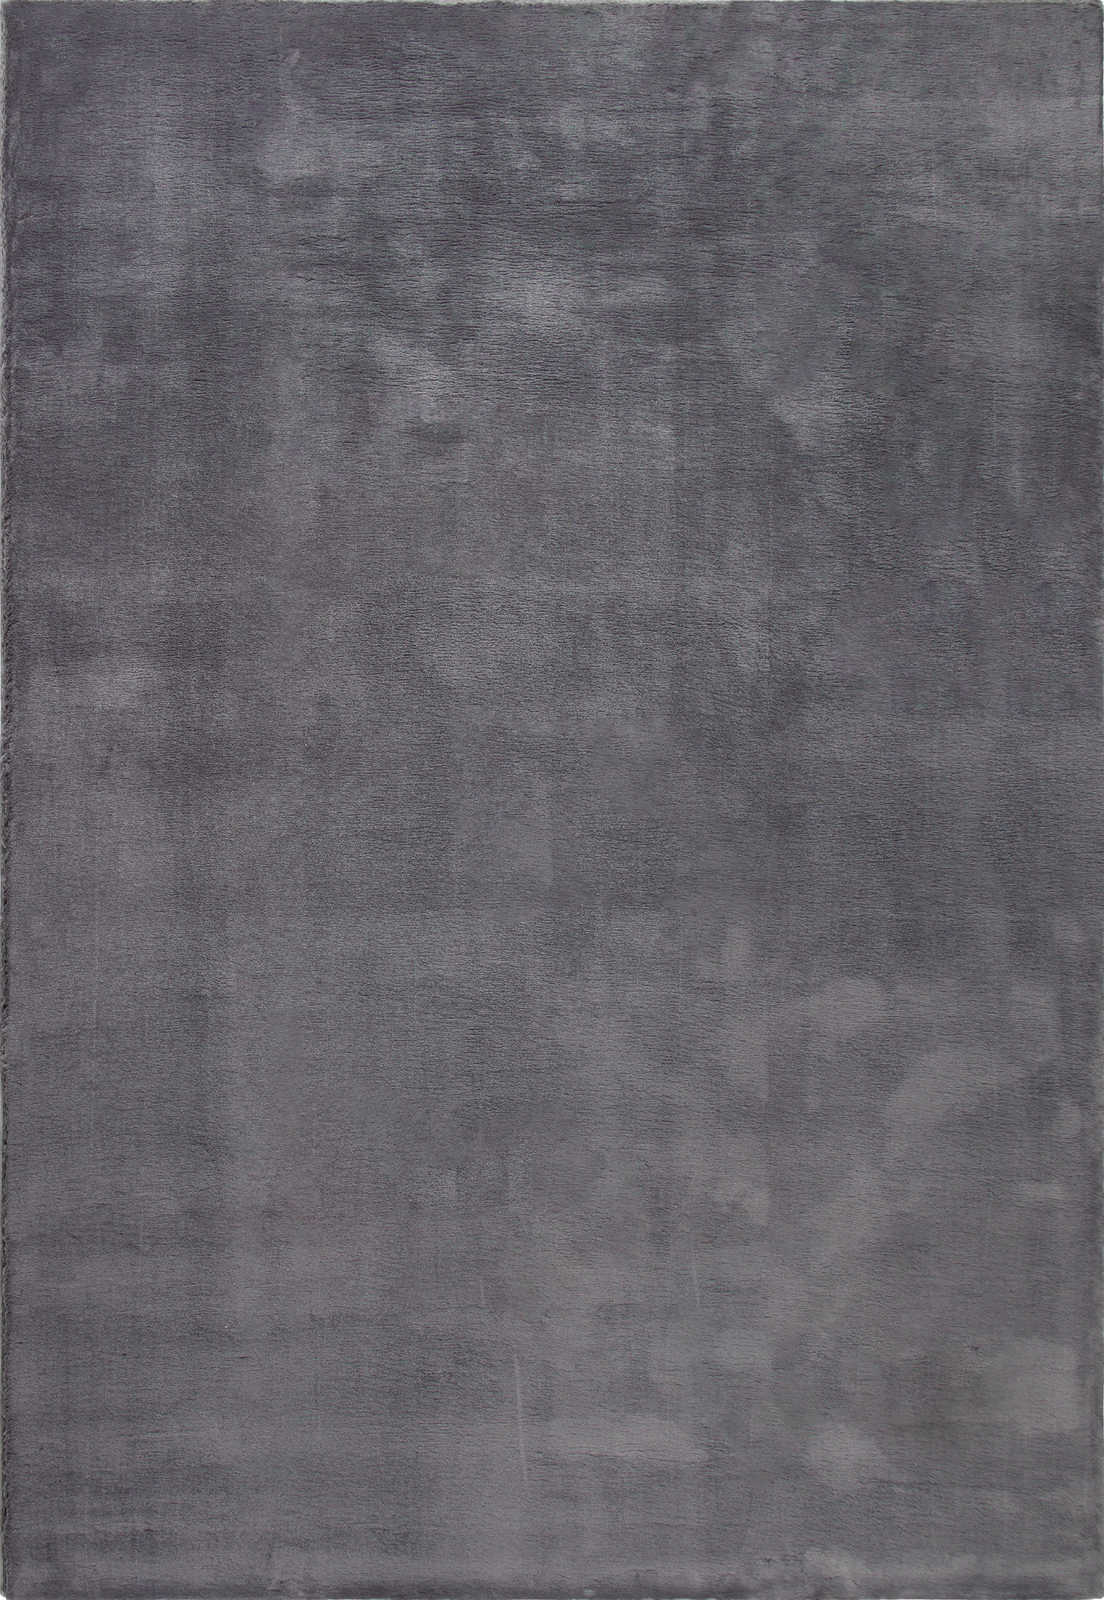             Modern high pile carpet in anthracite - 170 x 120 cm
        